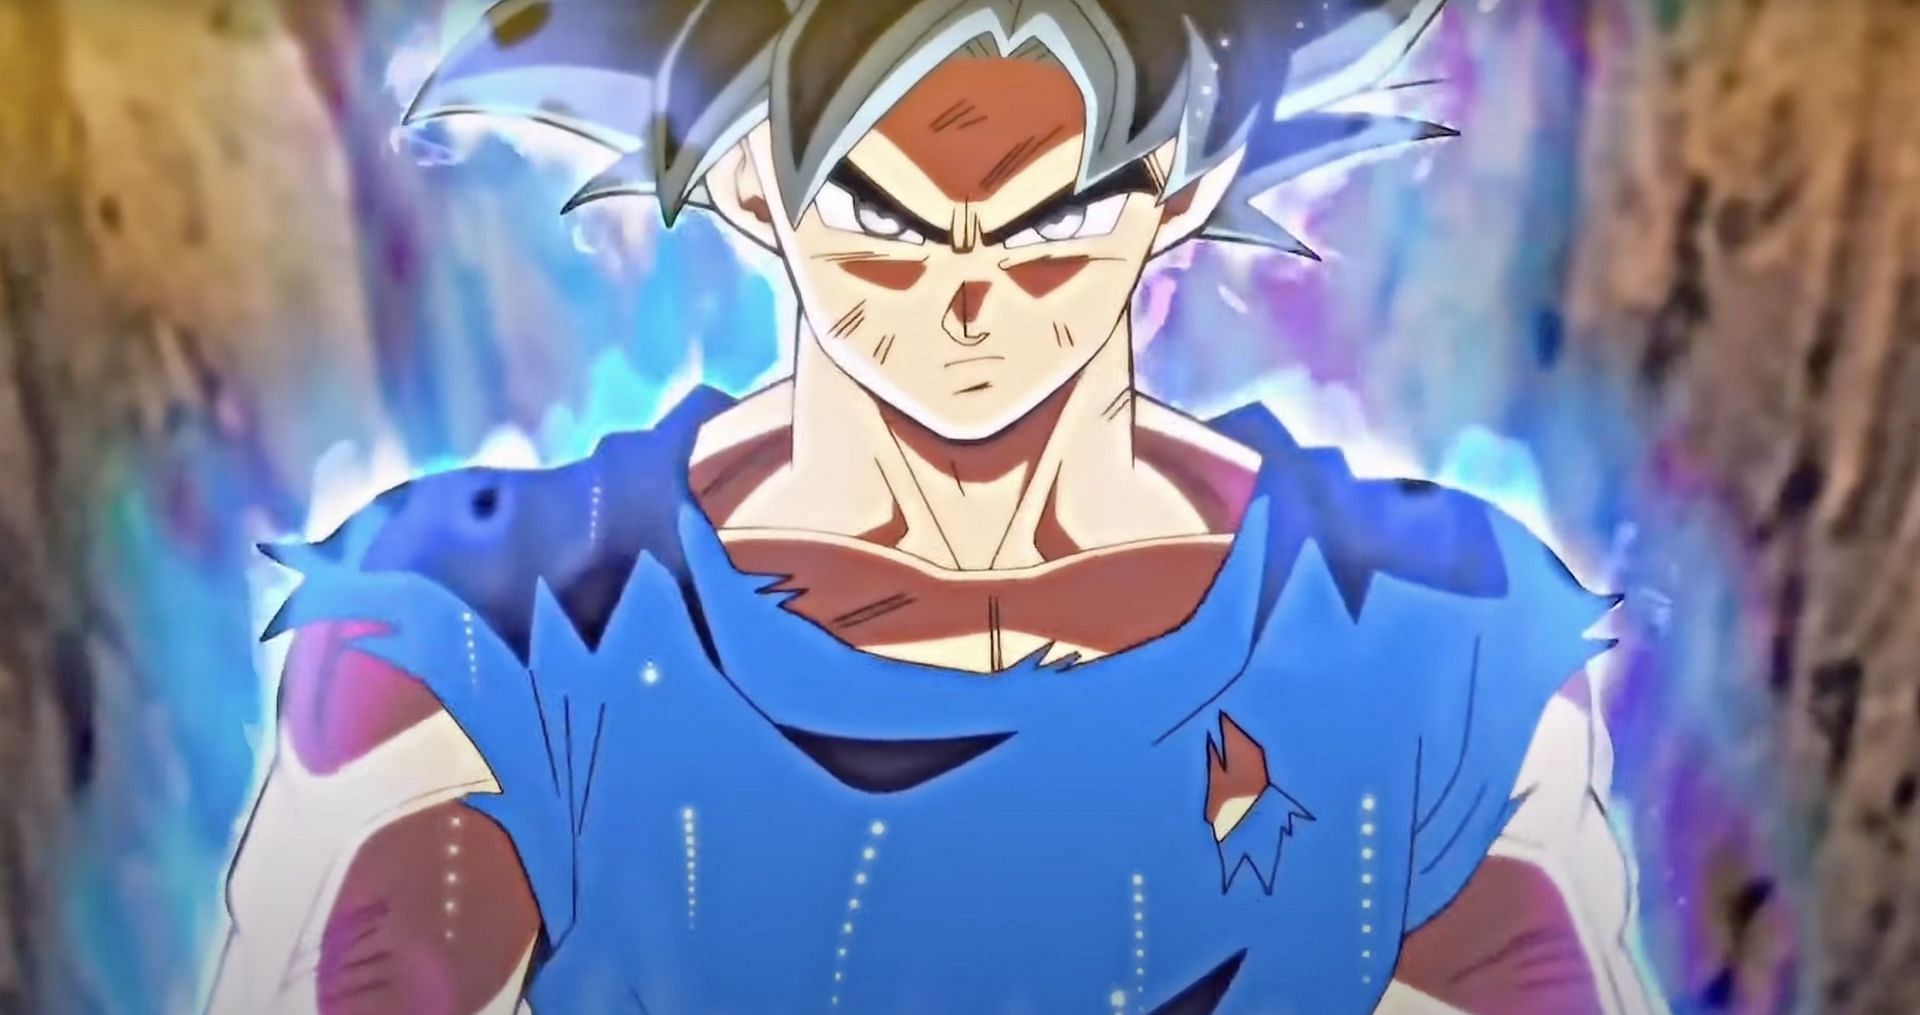 Son Goku as seen in anime (Image via Toei Animation)